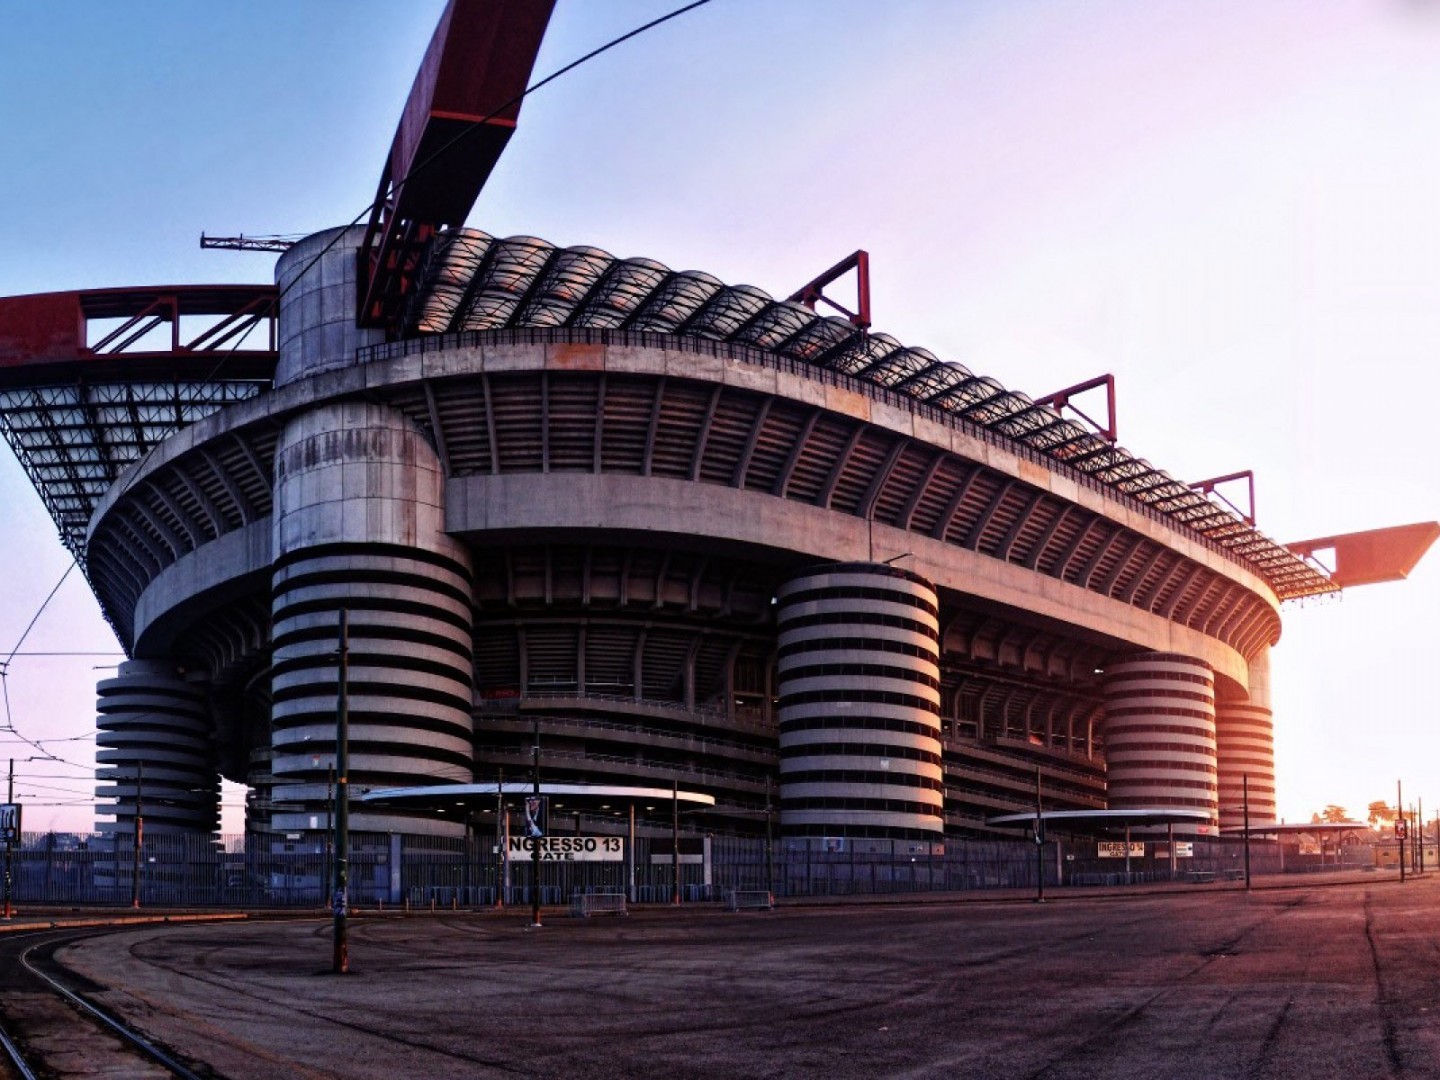 ac milan stadium wallpaper Milan wallpapers siro san club football soccer ac